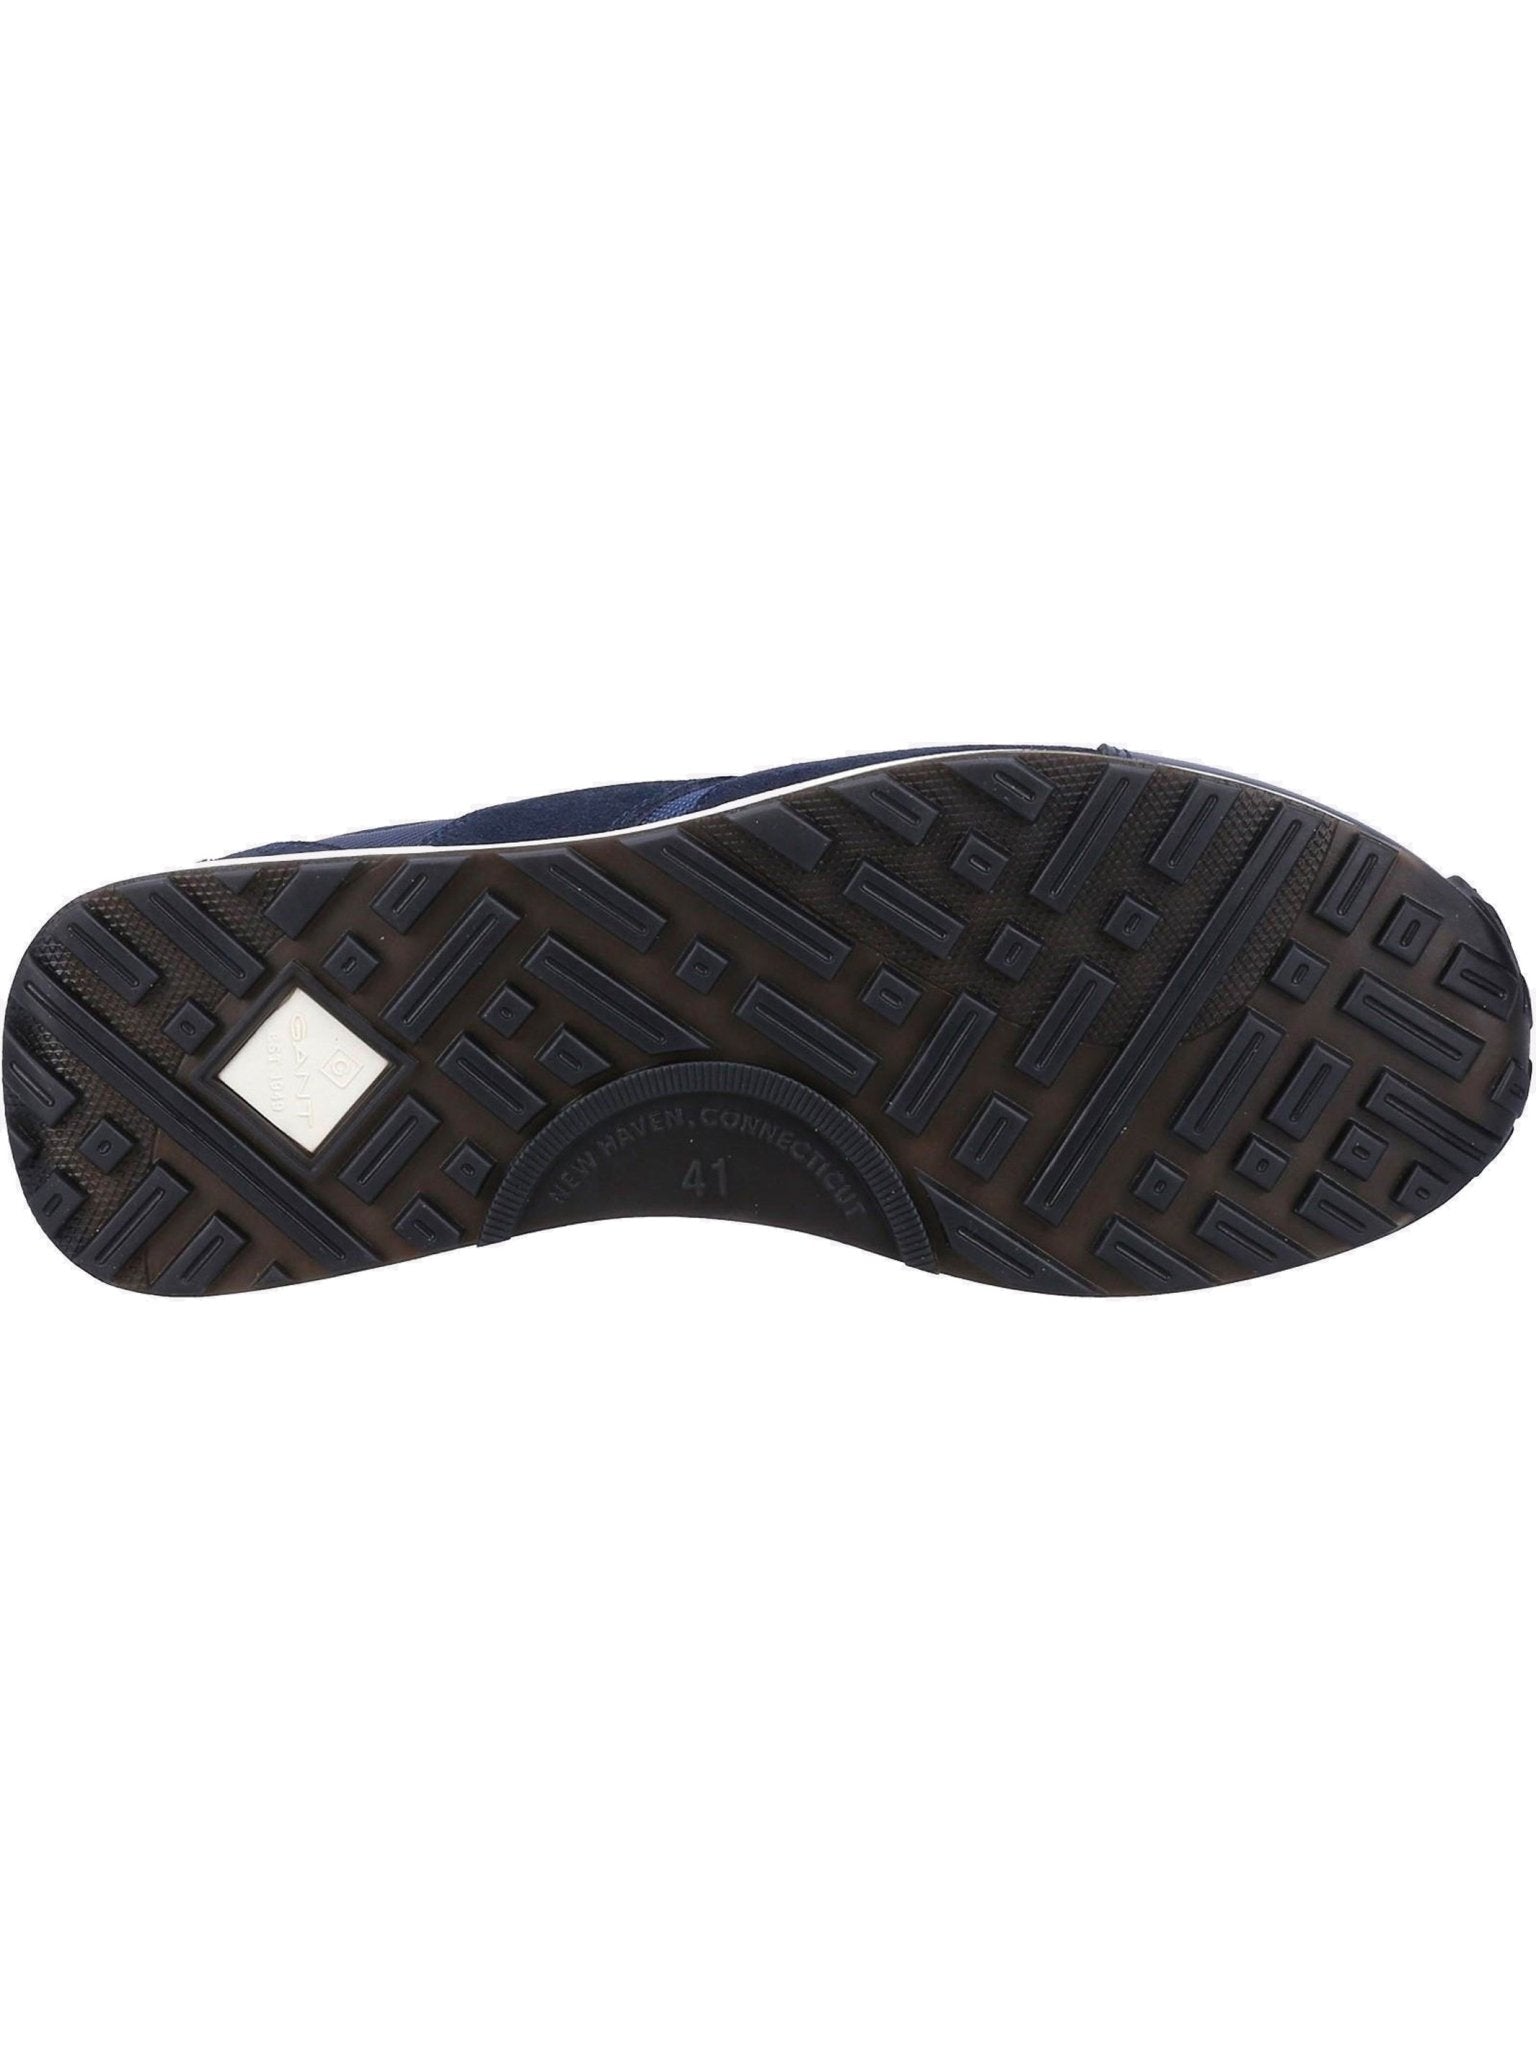 4elementsclothingGANTGANT - Garold G69 Mens trainer / Gant sneaker - Gant Leather Fabric mix shoeShoes